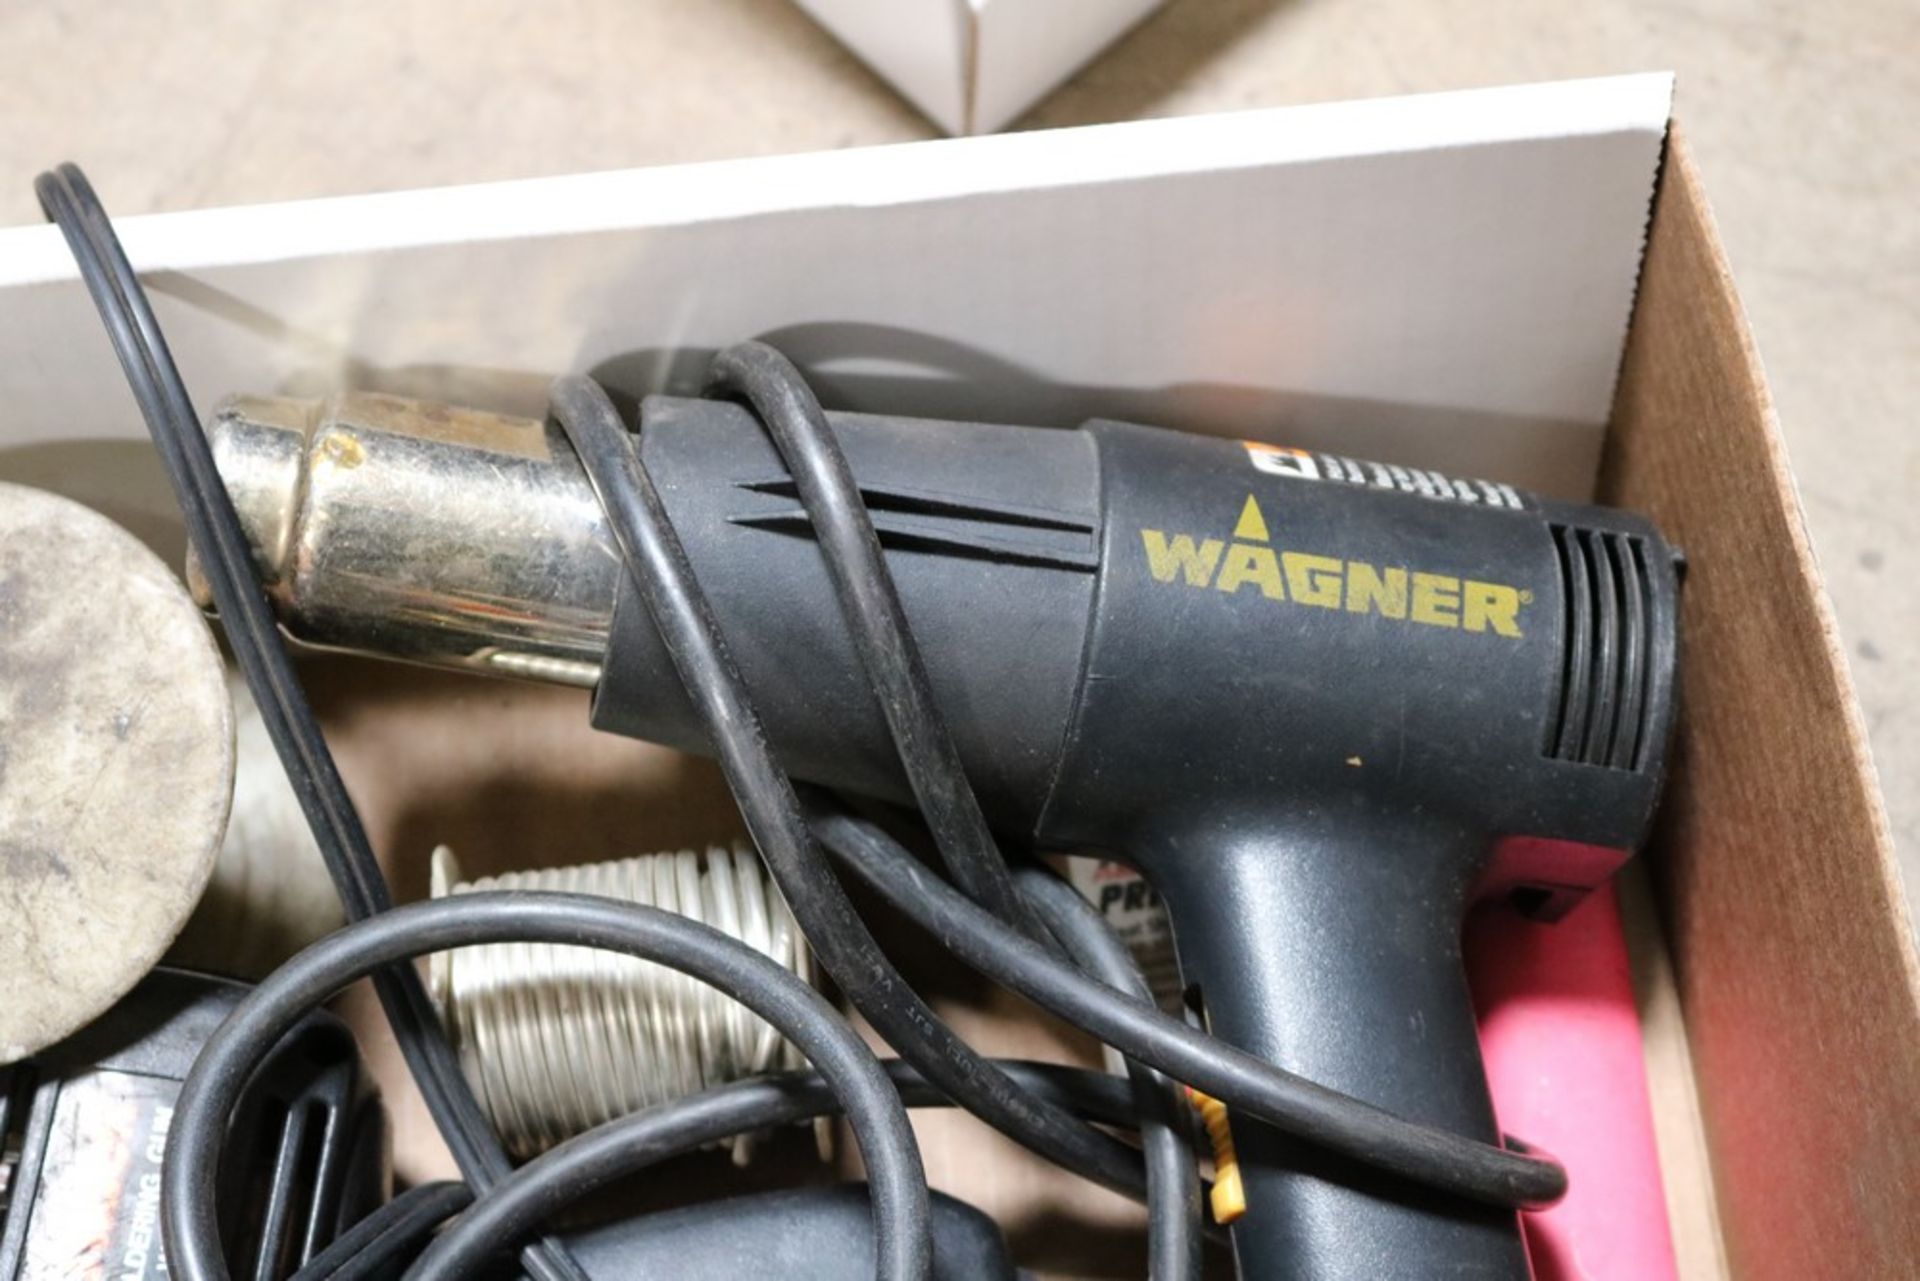 radio shack heat soldering gun w/ solder and wagner heat shrink gun w/ material - Image 3 of 3